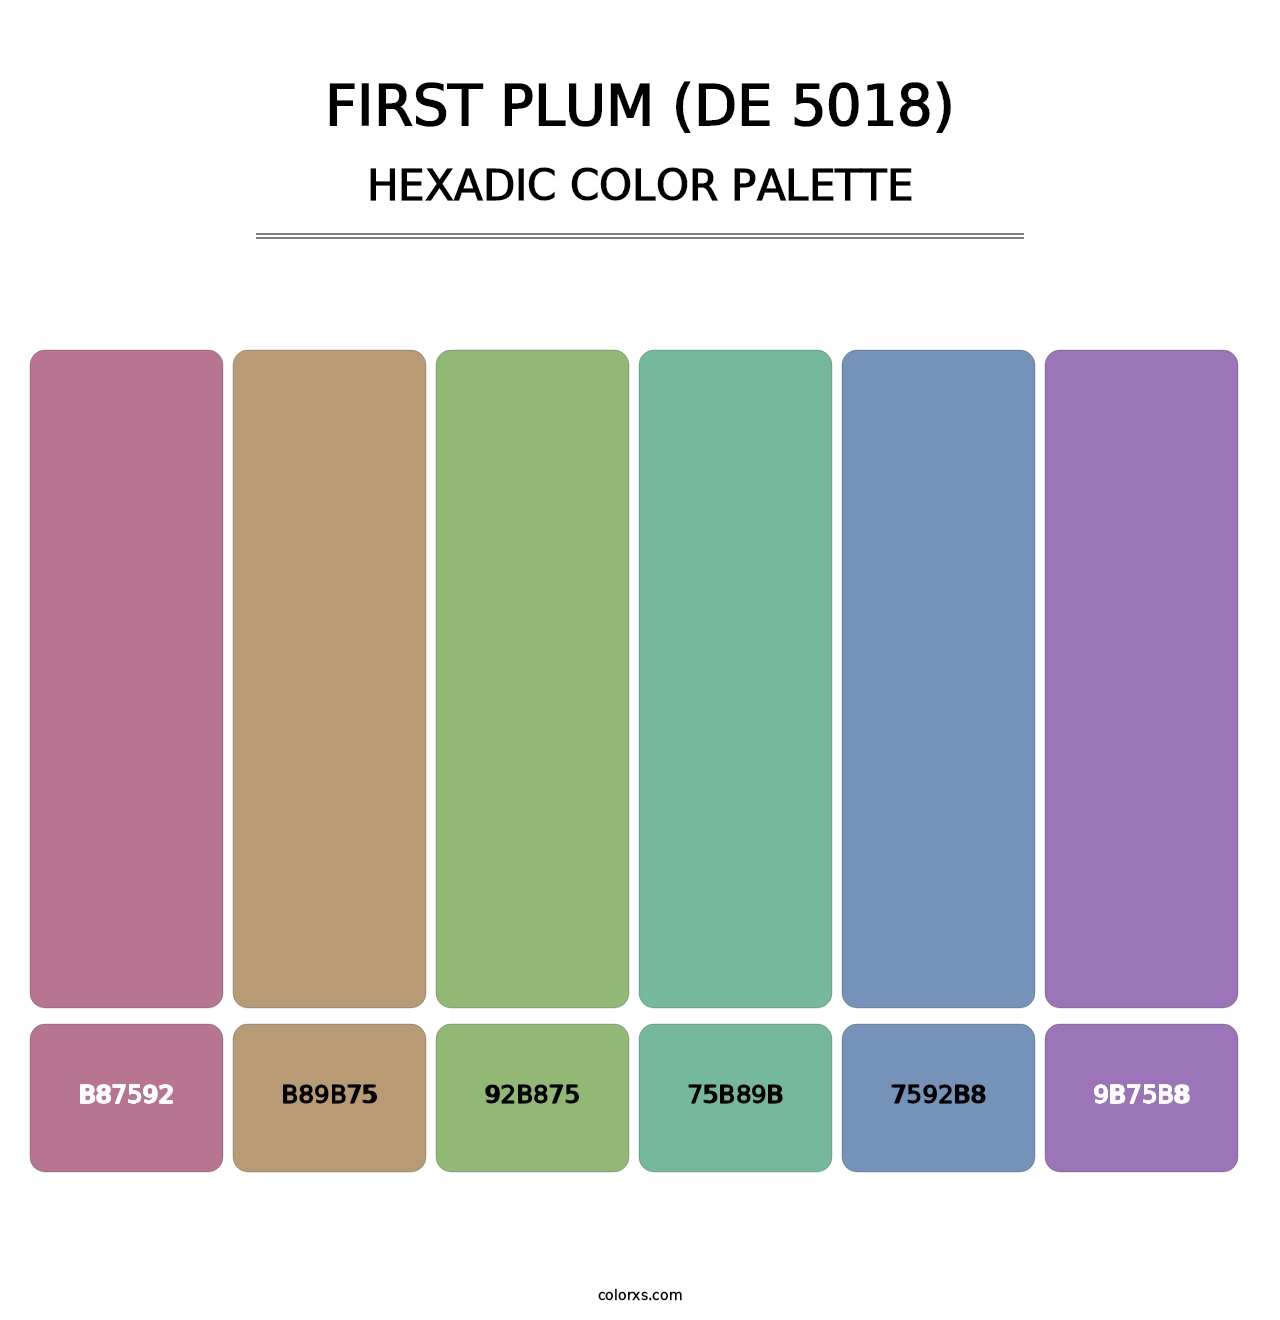 First Plum (DE 5018) - Hexadic Color Palette